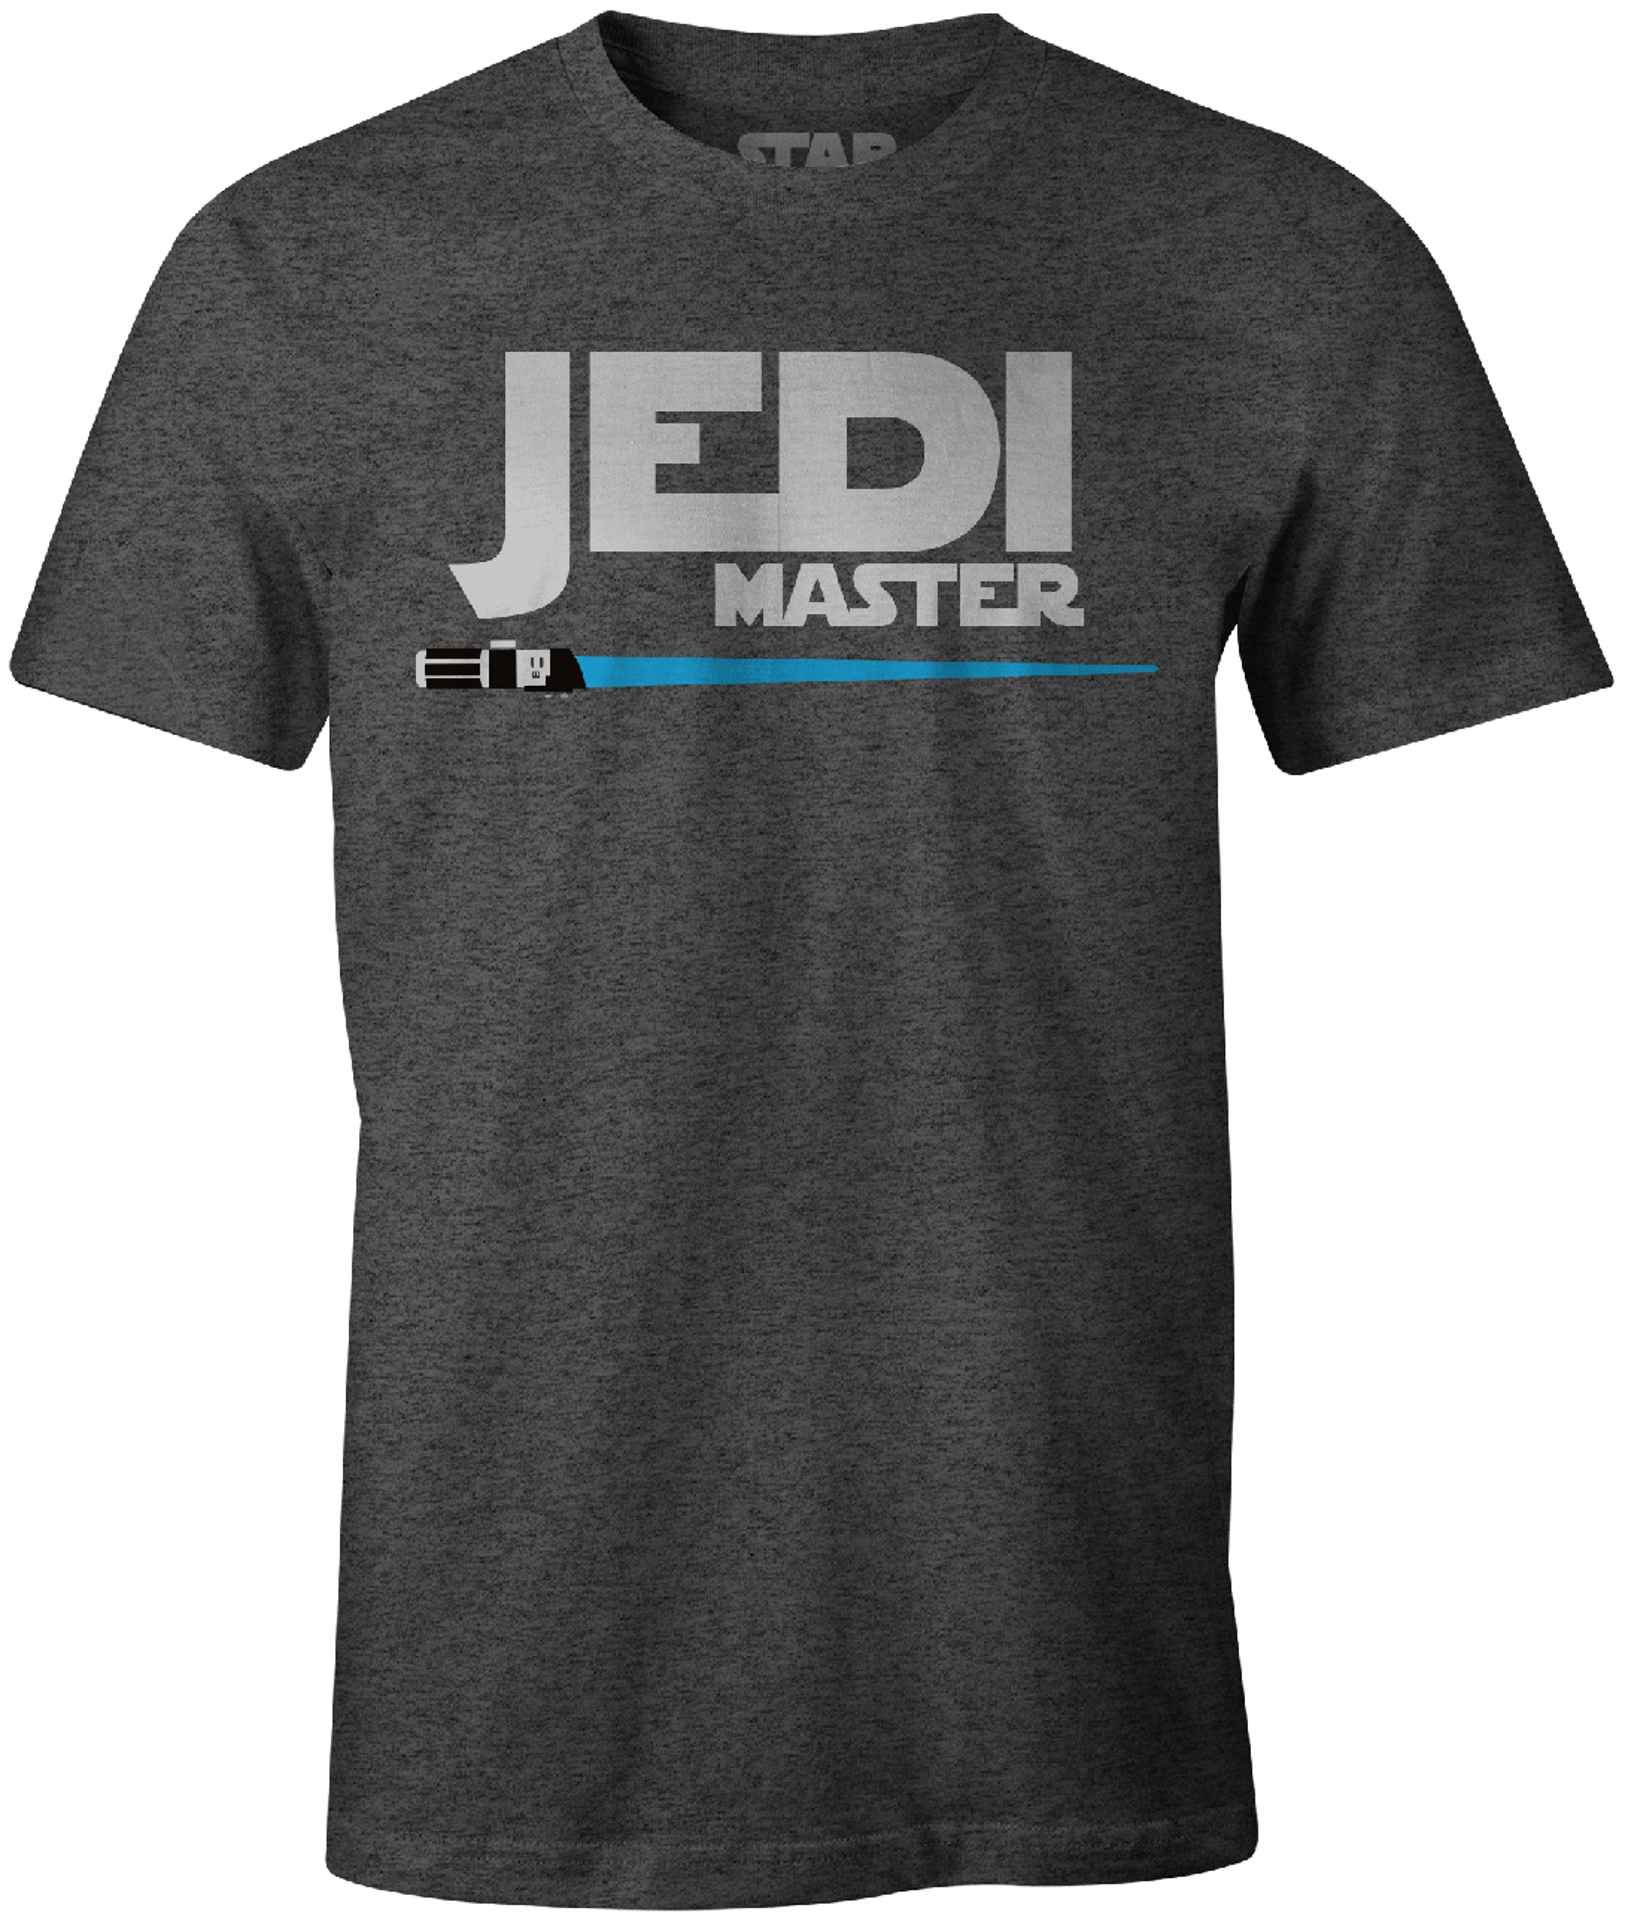 Star Wars - T-Shirt Noir Maître Jedi - M